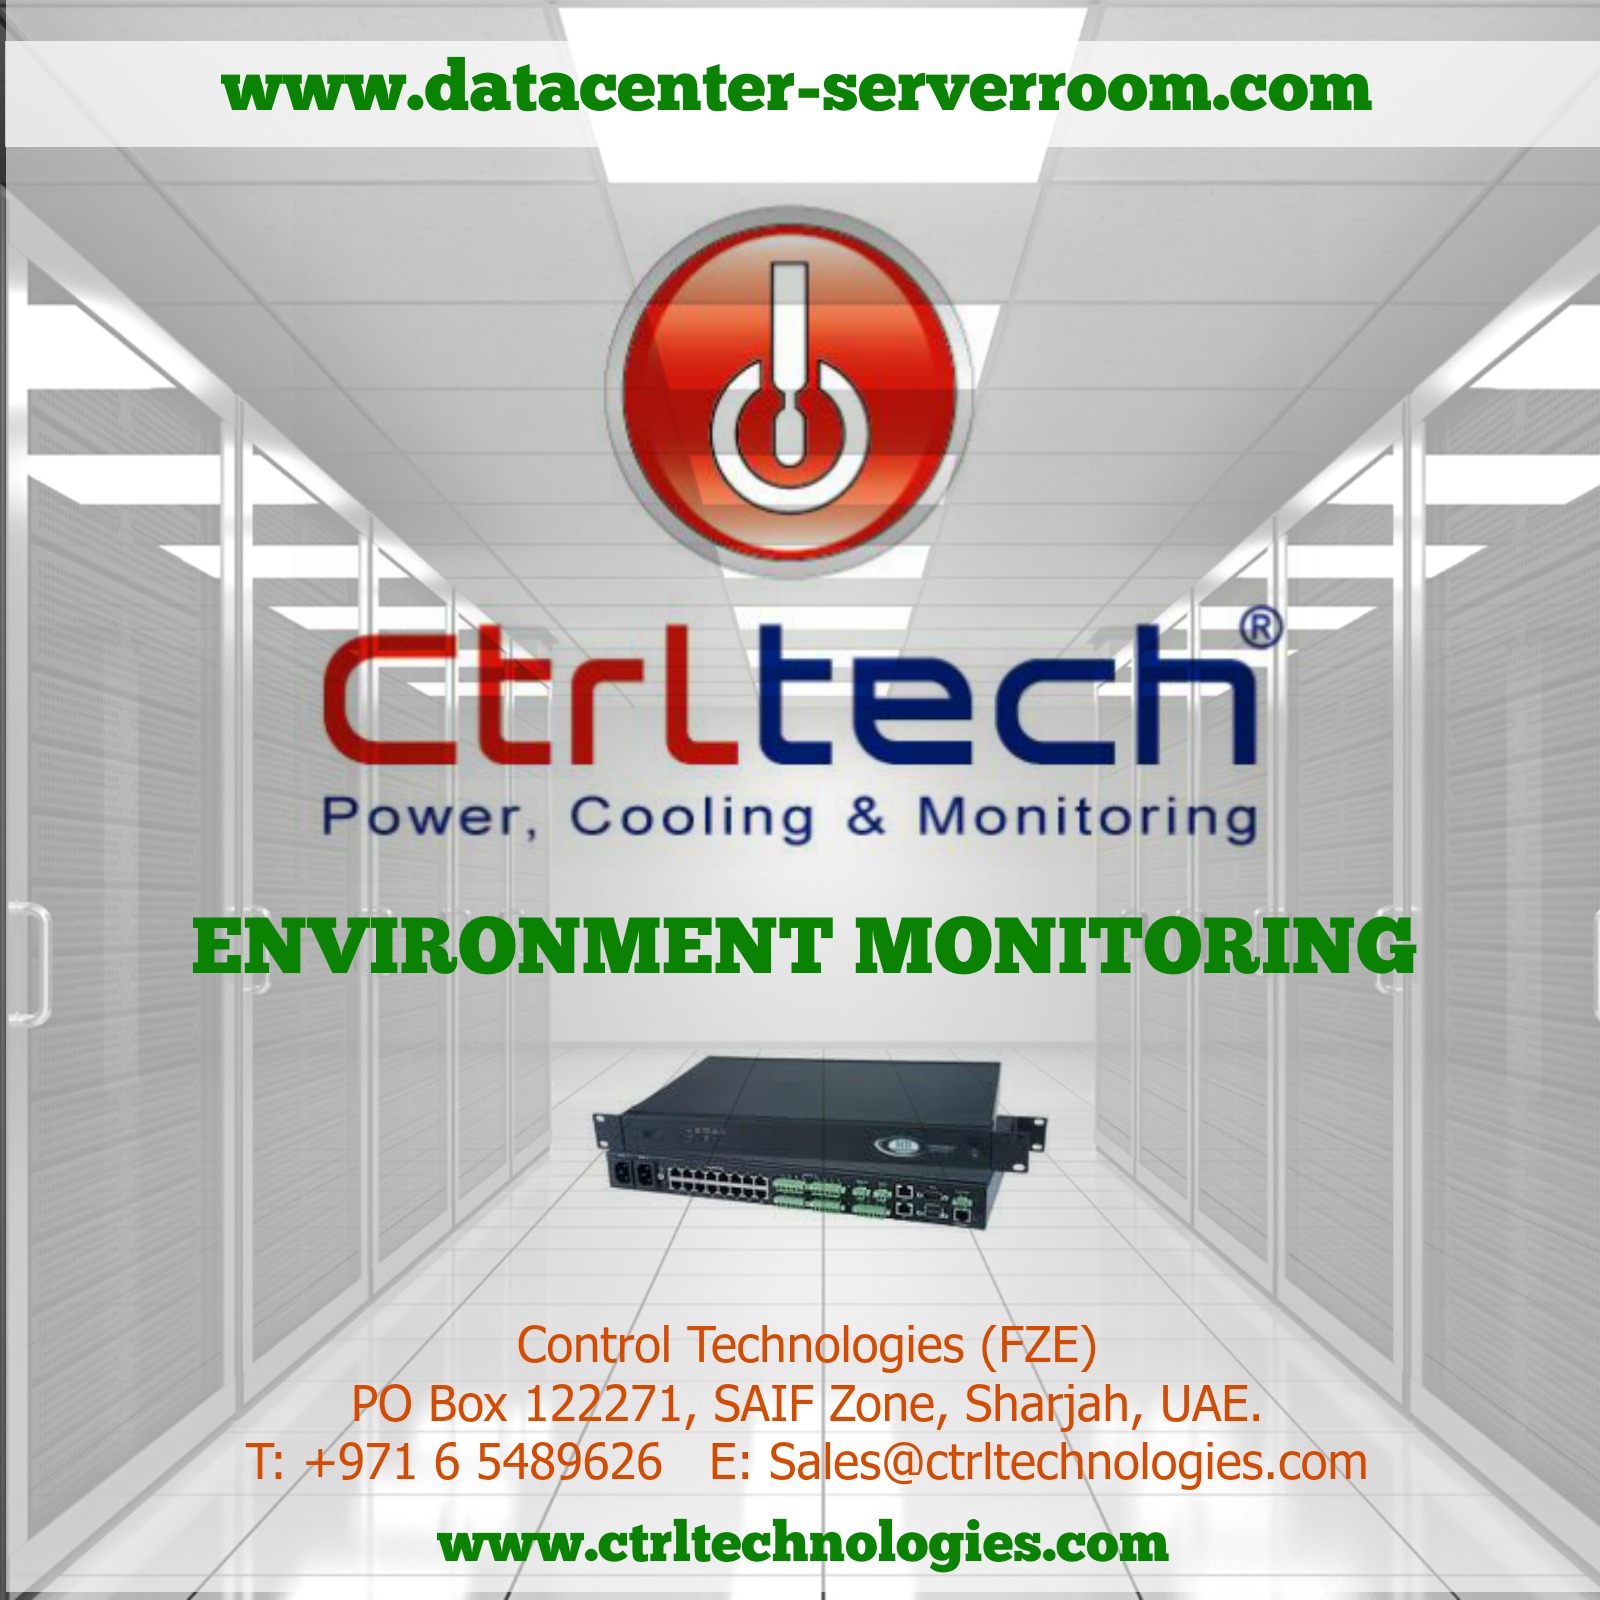 Data Center & Server Room Environmental Monitoring